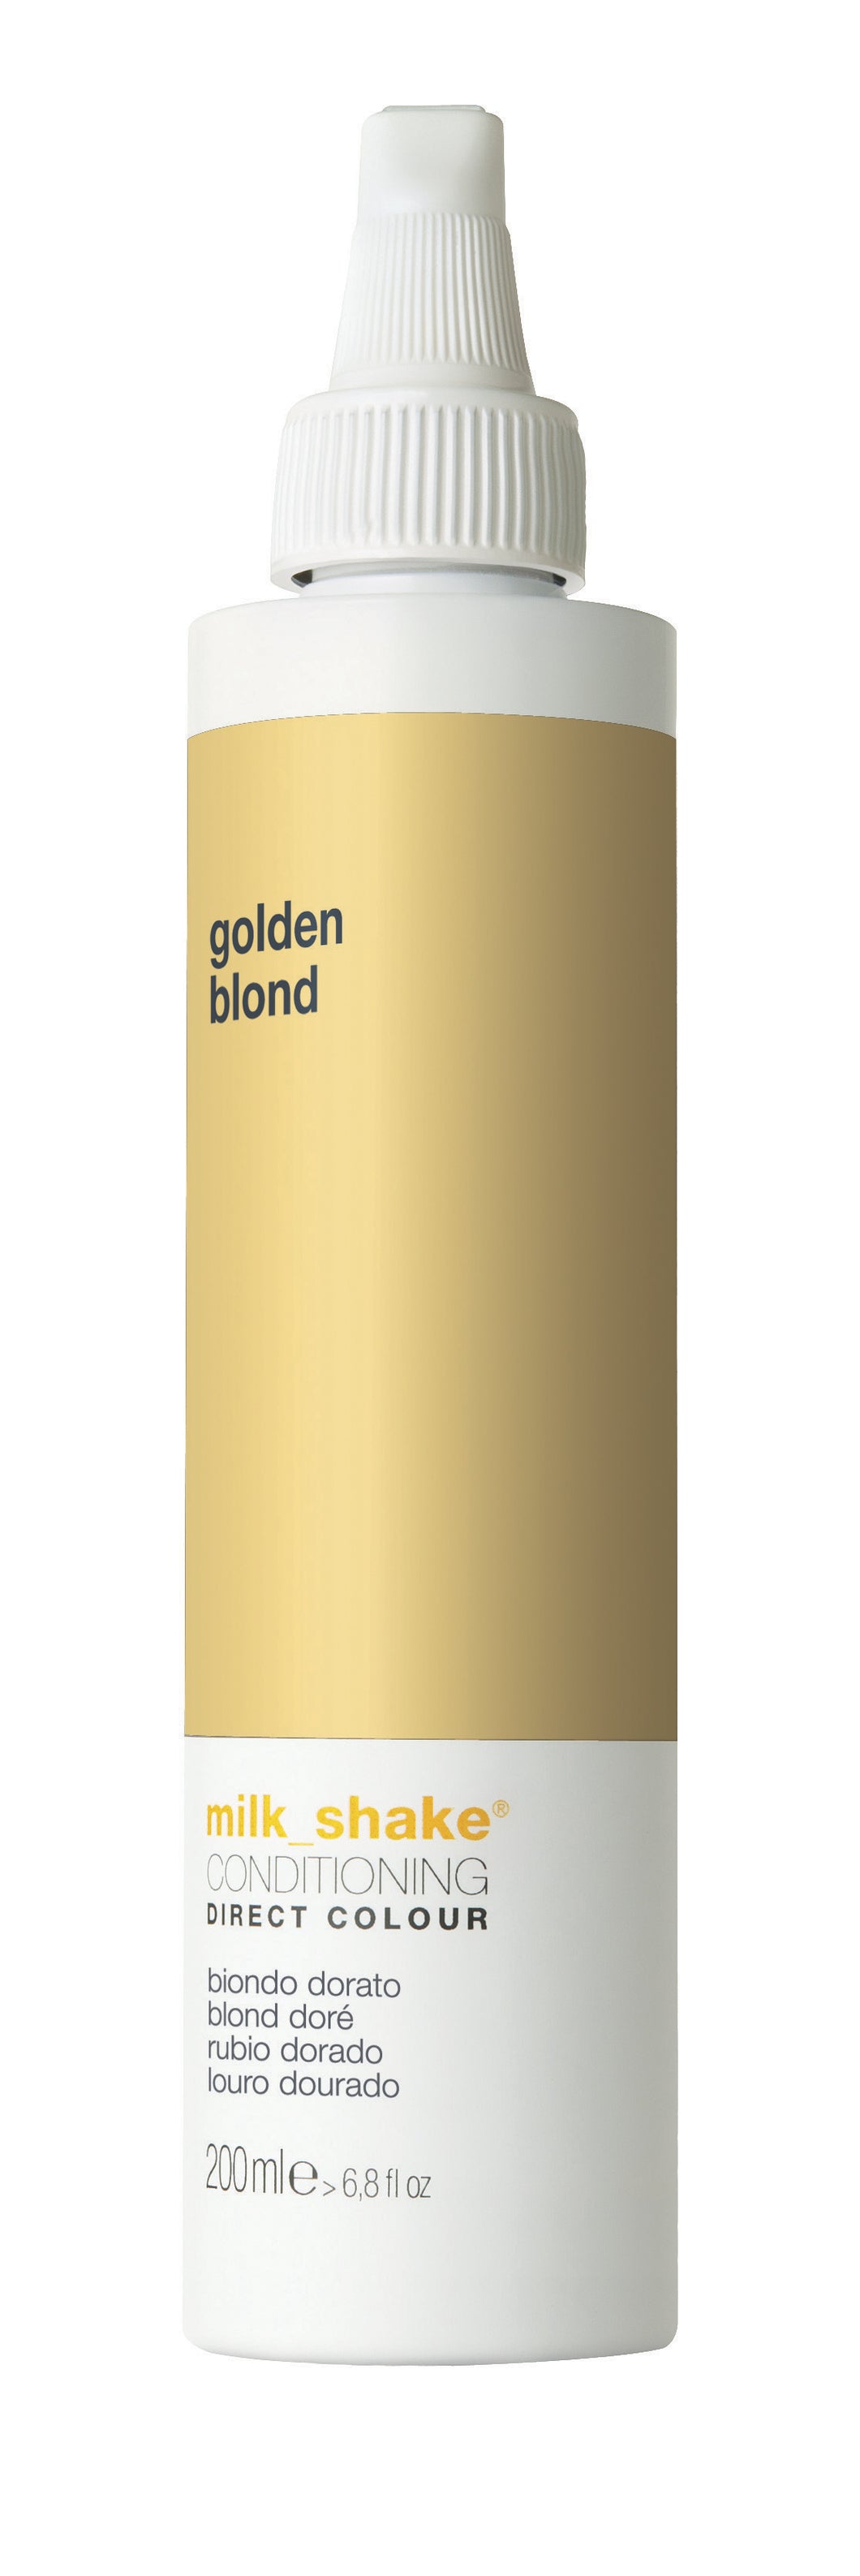 milk_shake direct colour golden blonde-0